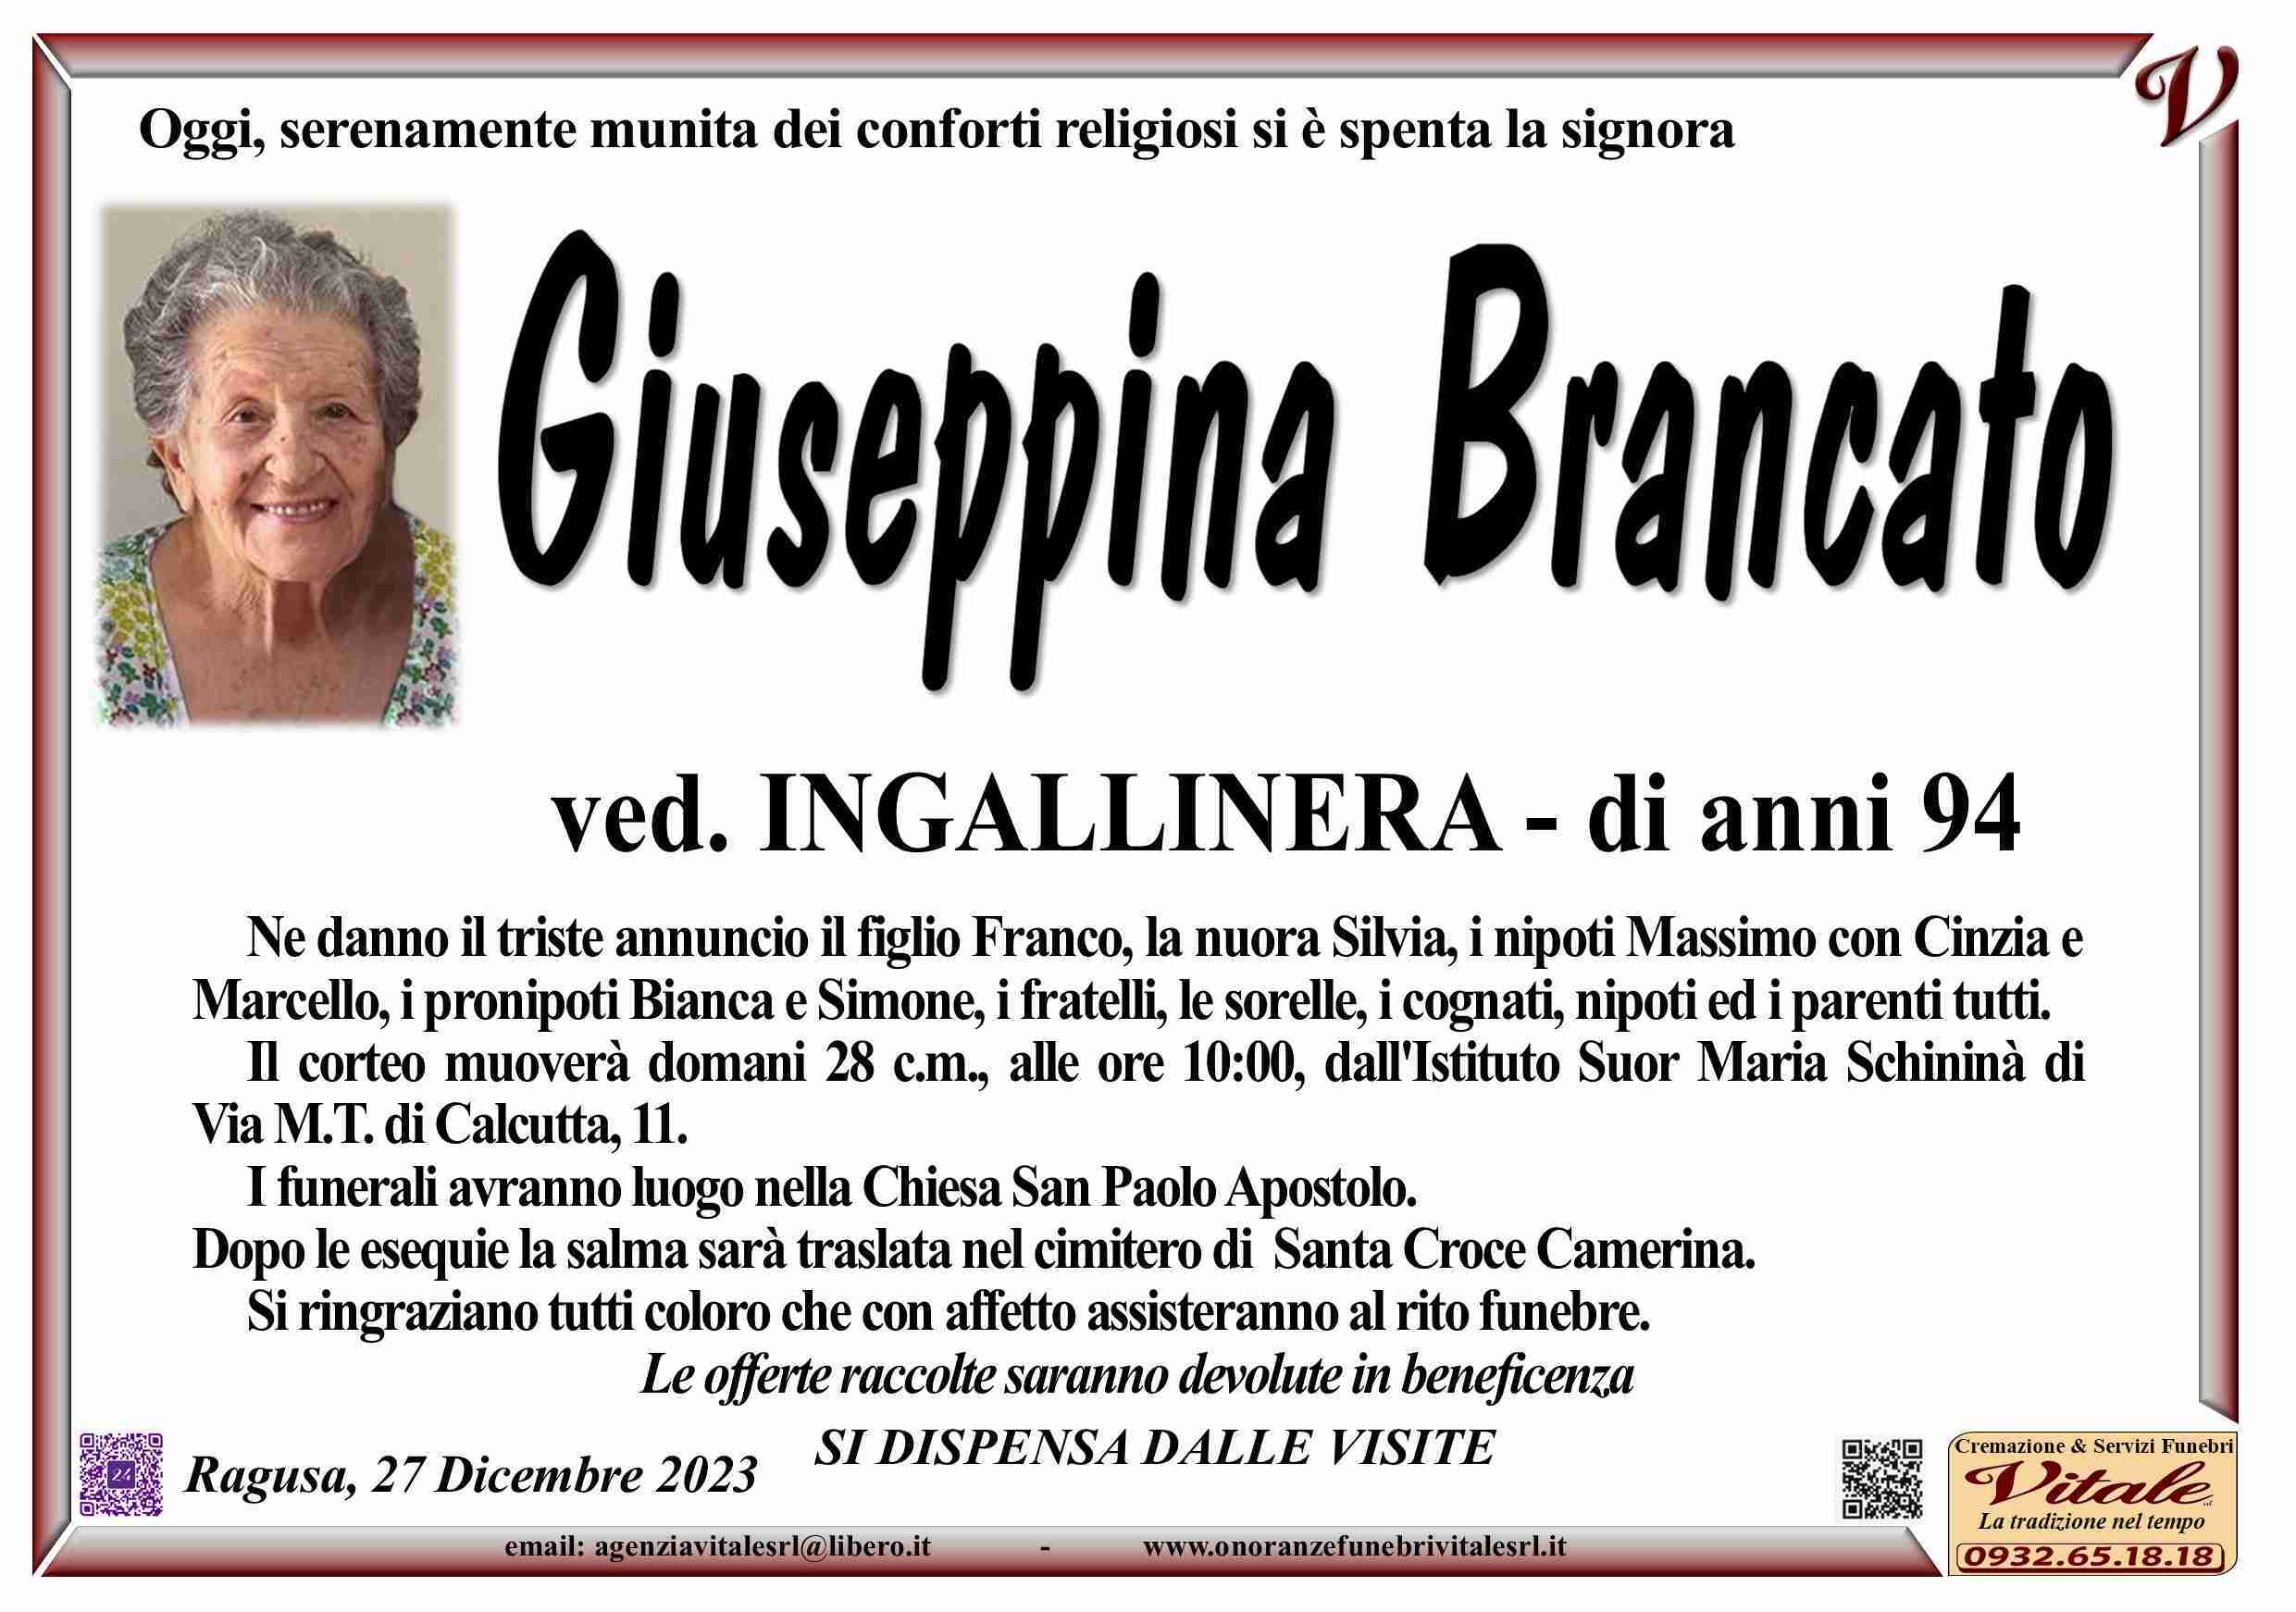 Giuseppina Brancato